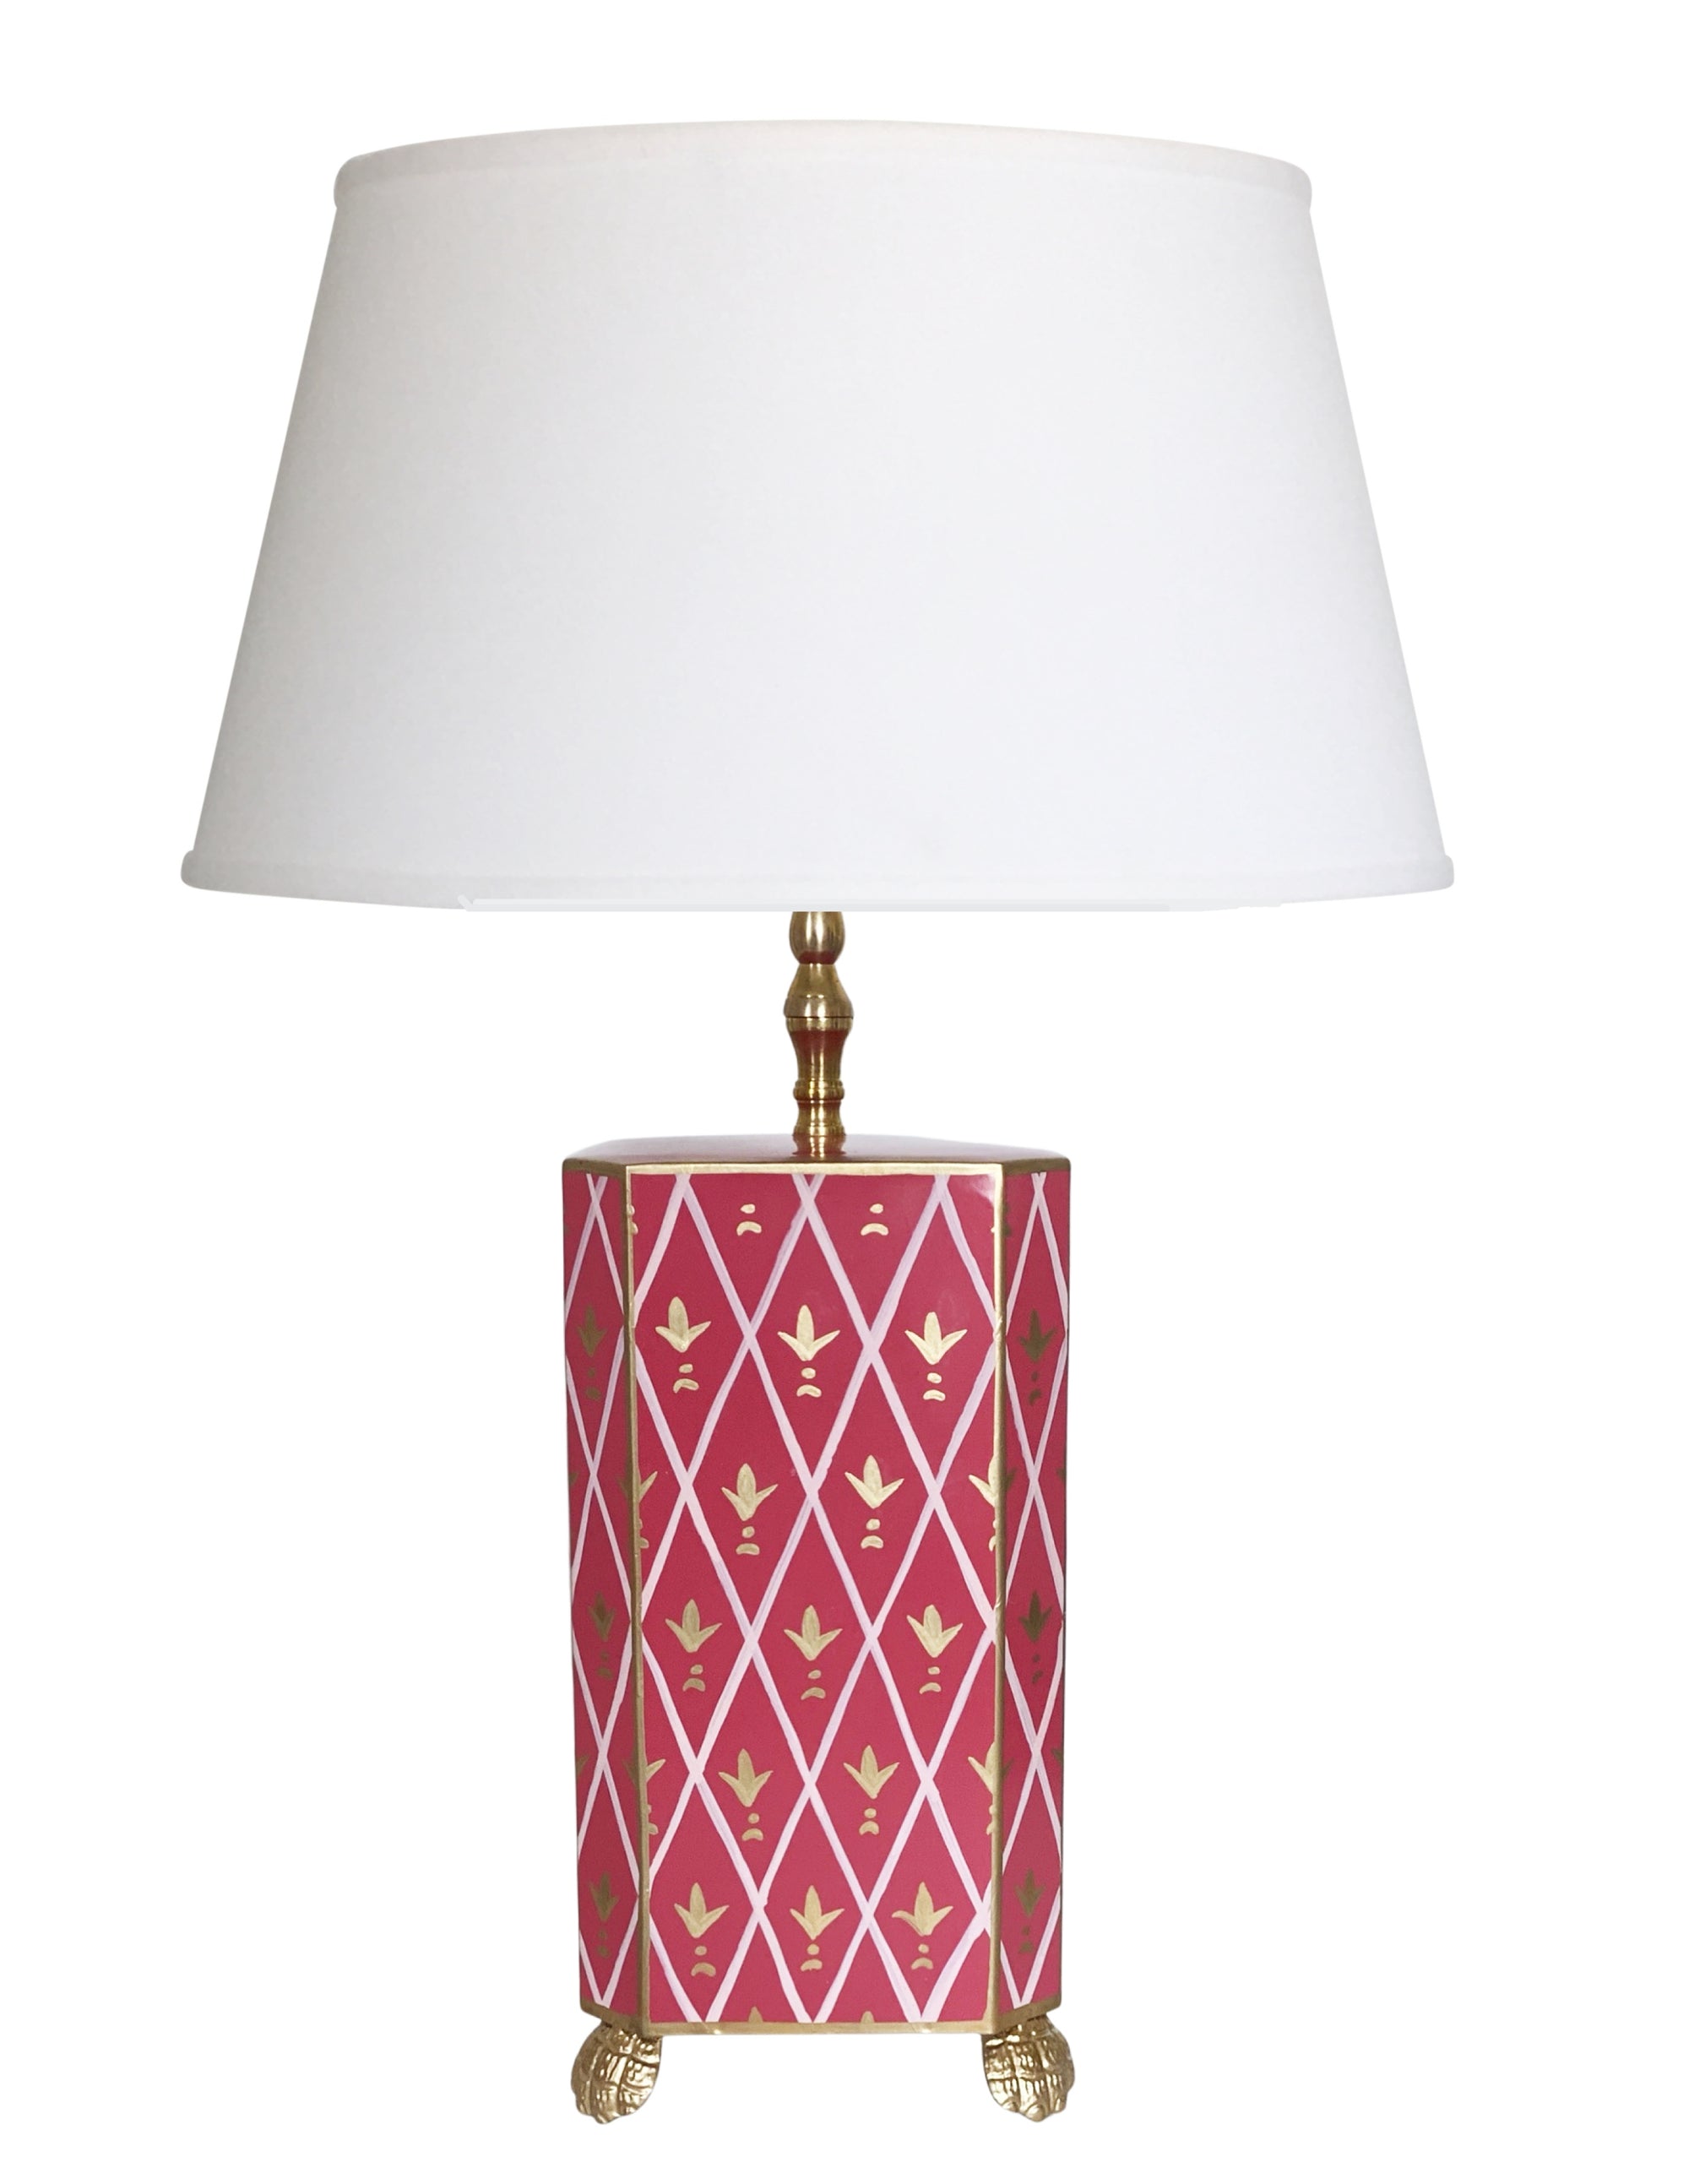 Dana Gibson Newport in Pink Table Lamp